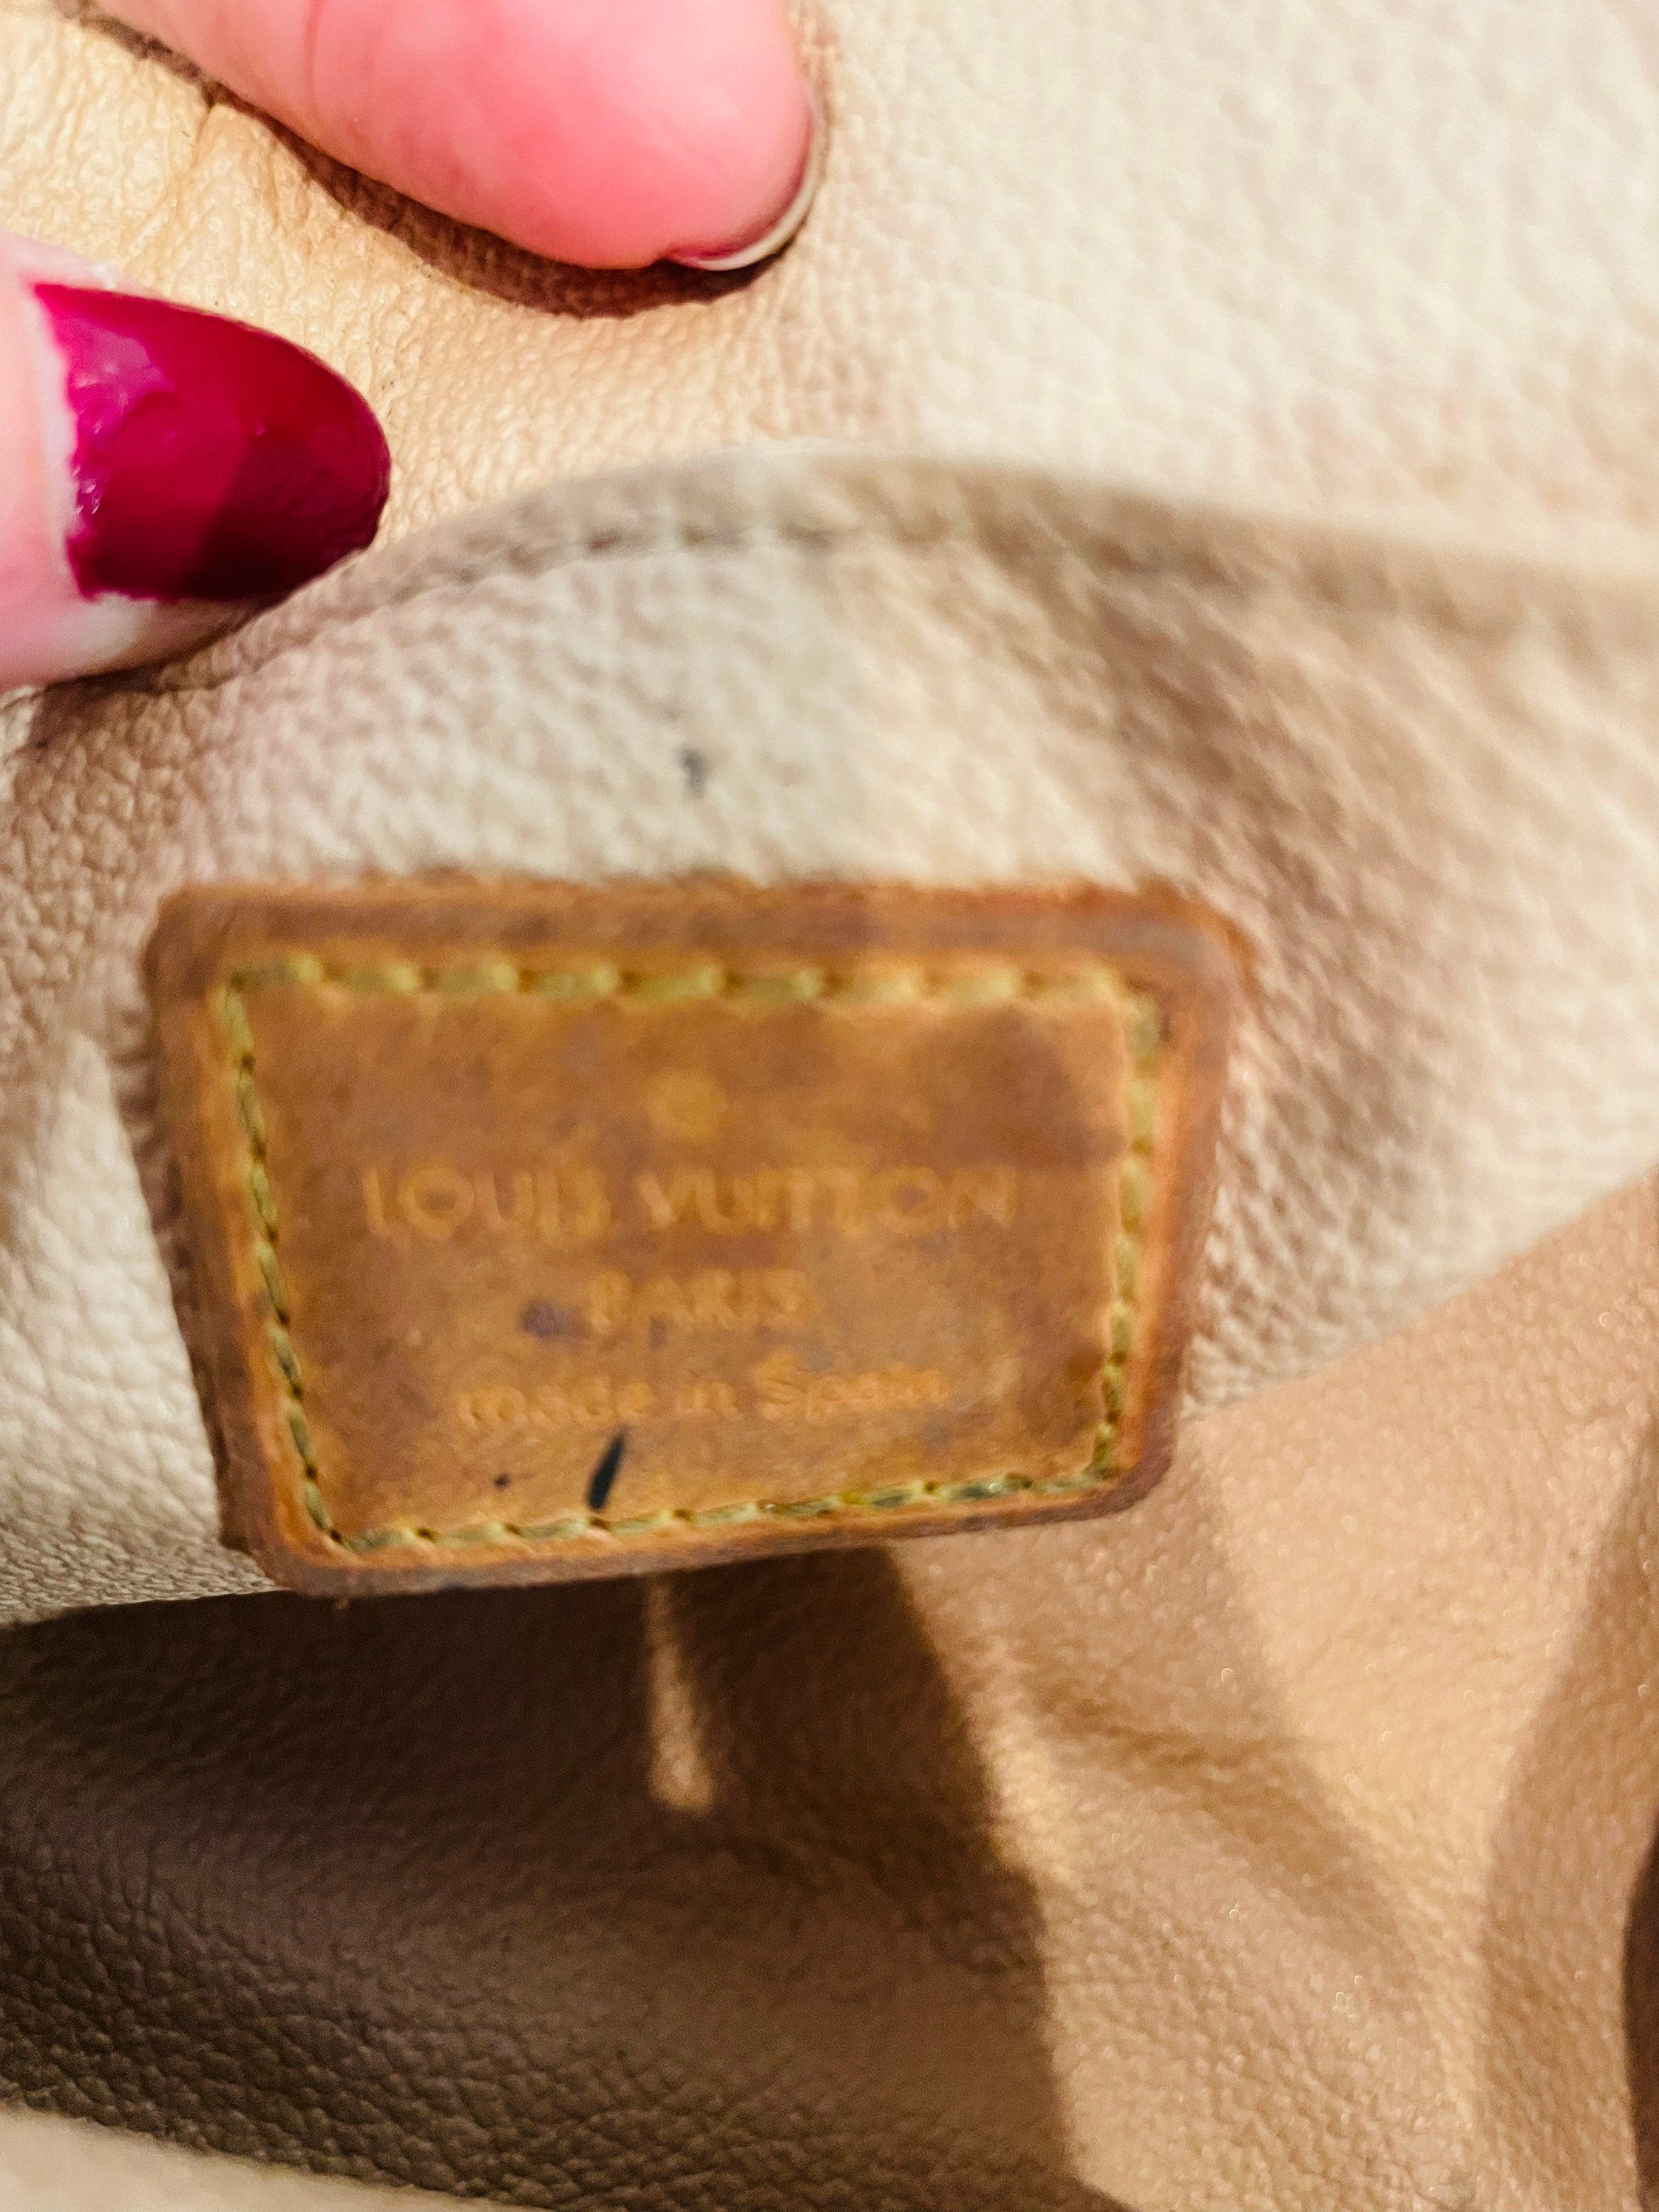 Best Vintage Louis Vuitton Make Up Bag for sale in St. Helens